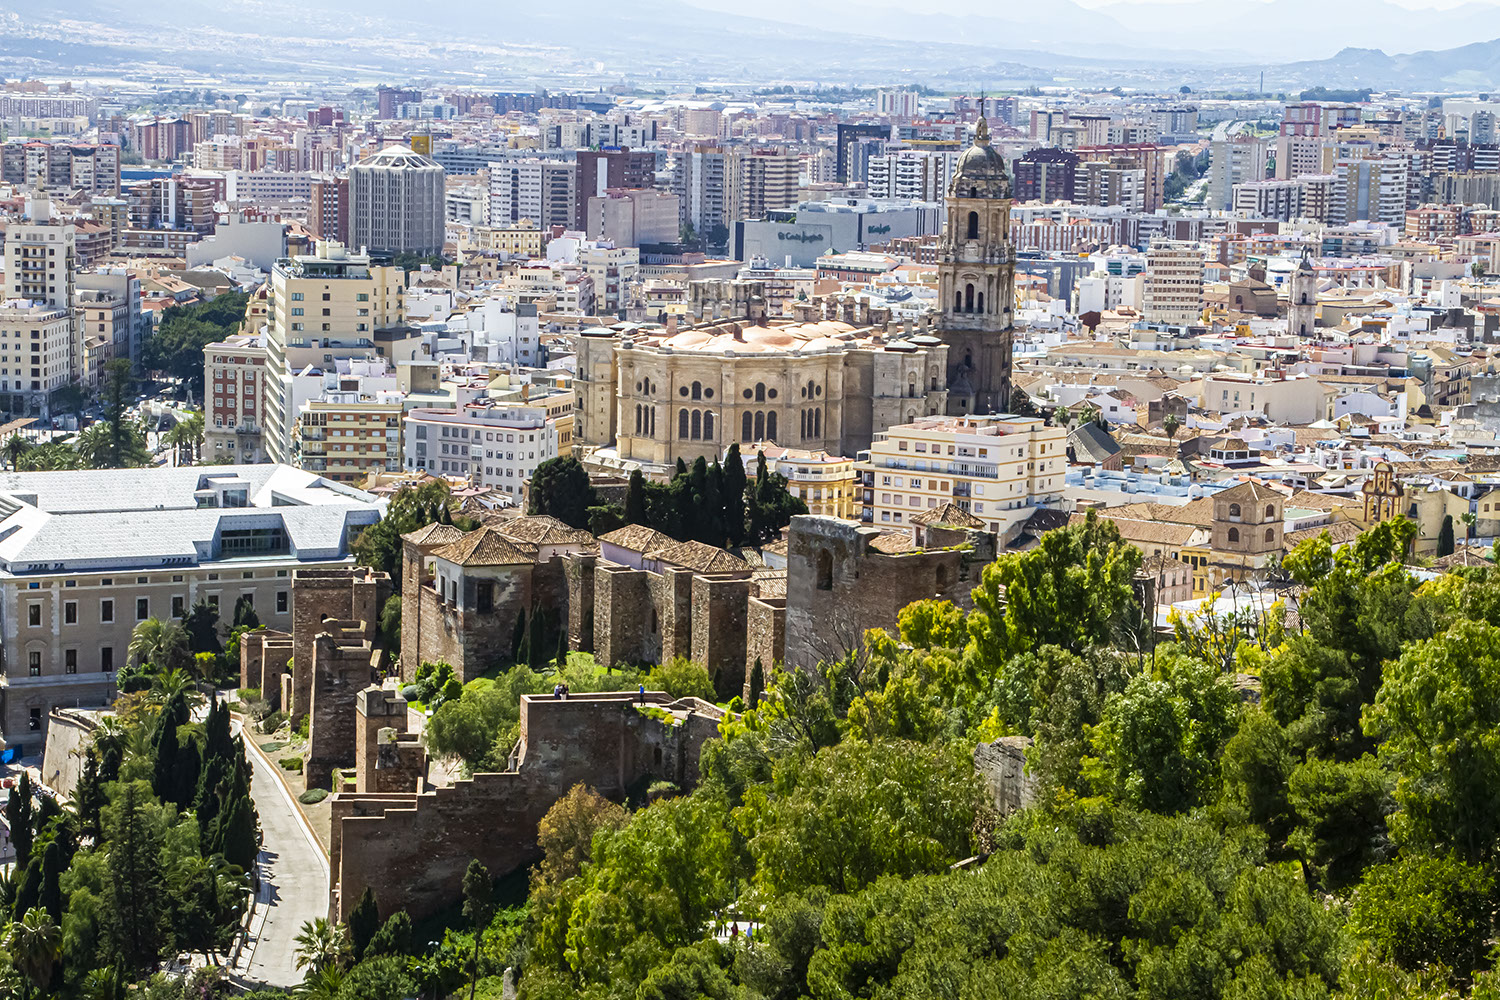 Spain, Town Centre in Malaga, taken from the footpath to Monte Gibralfaro.